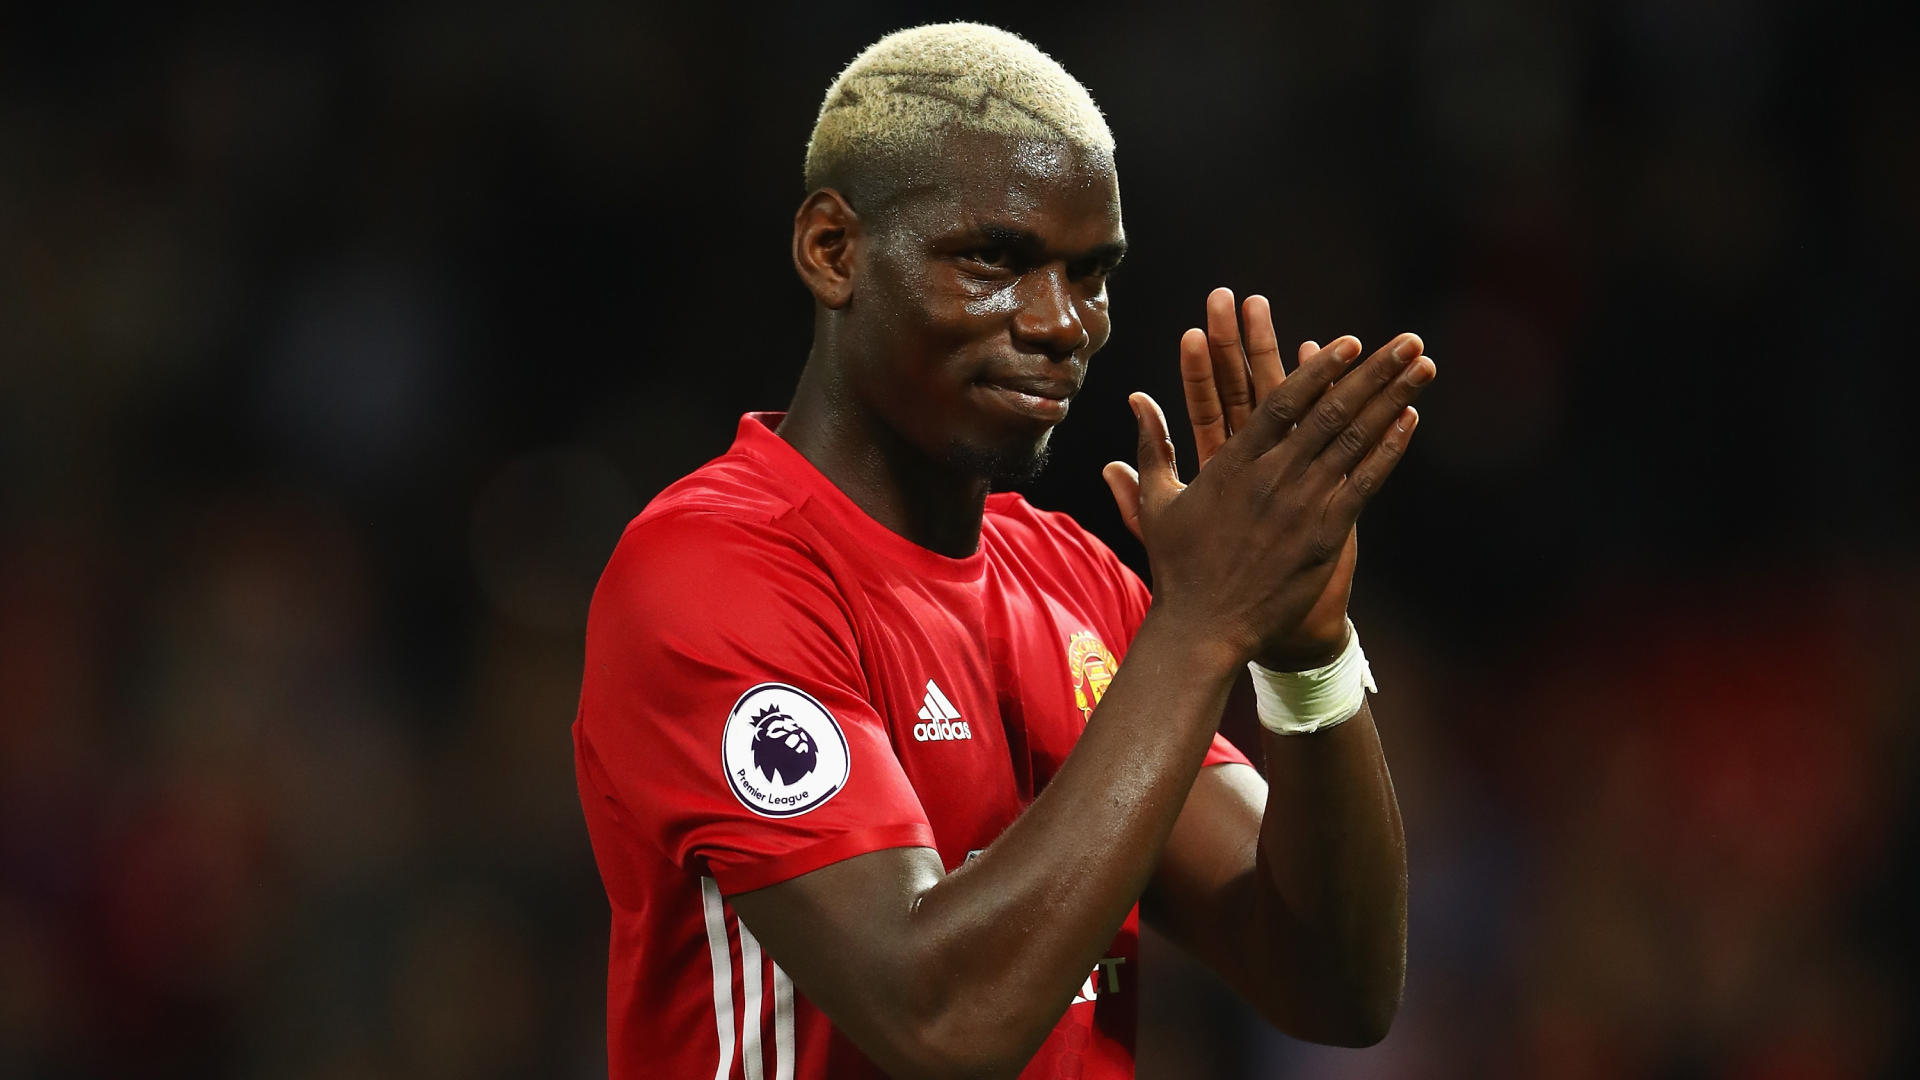 Paul Pogba transfert Manchester United 105 M€